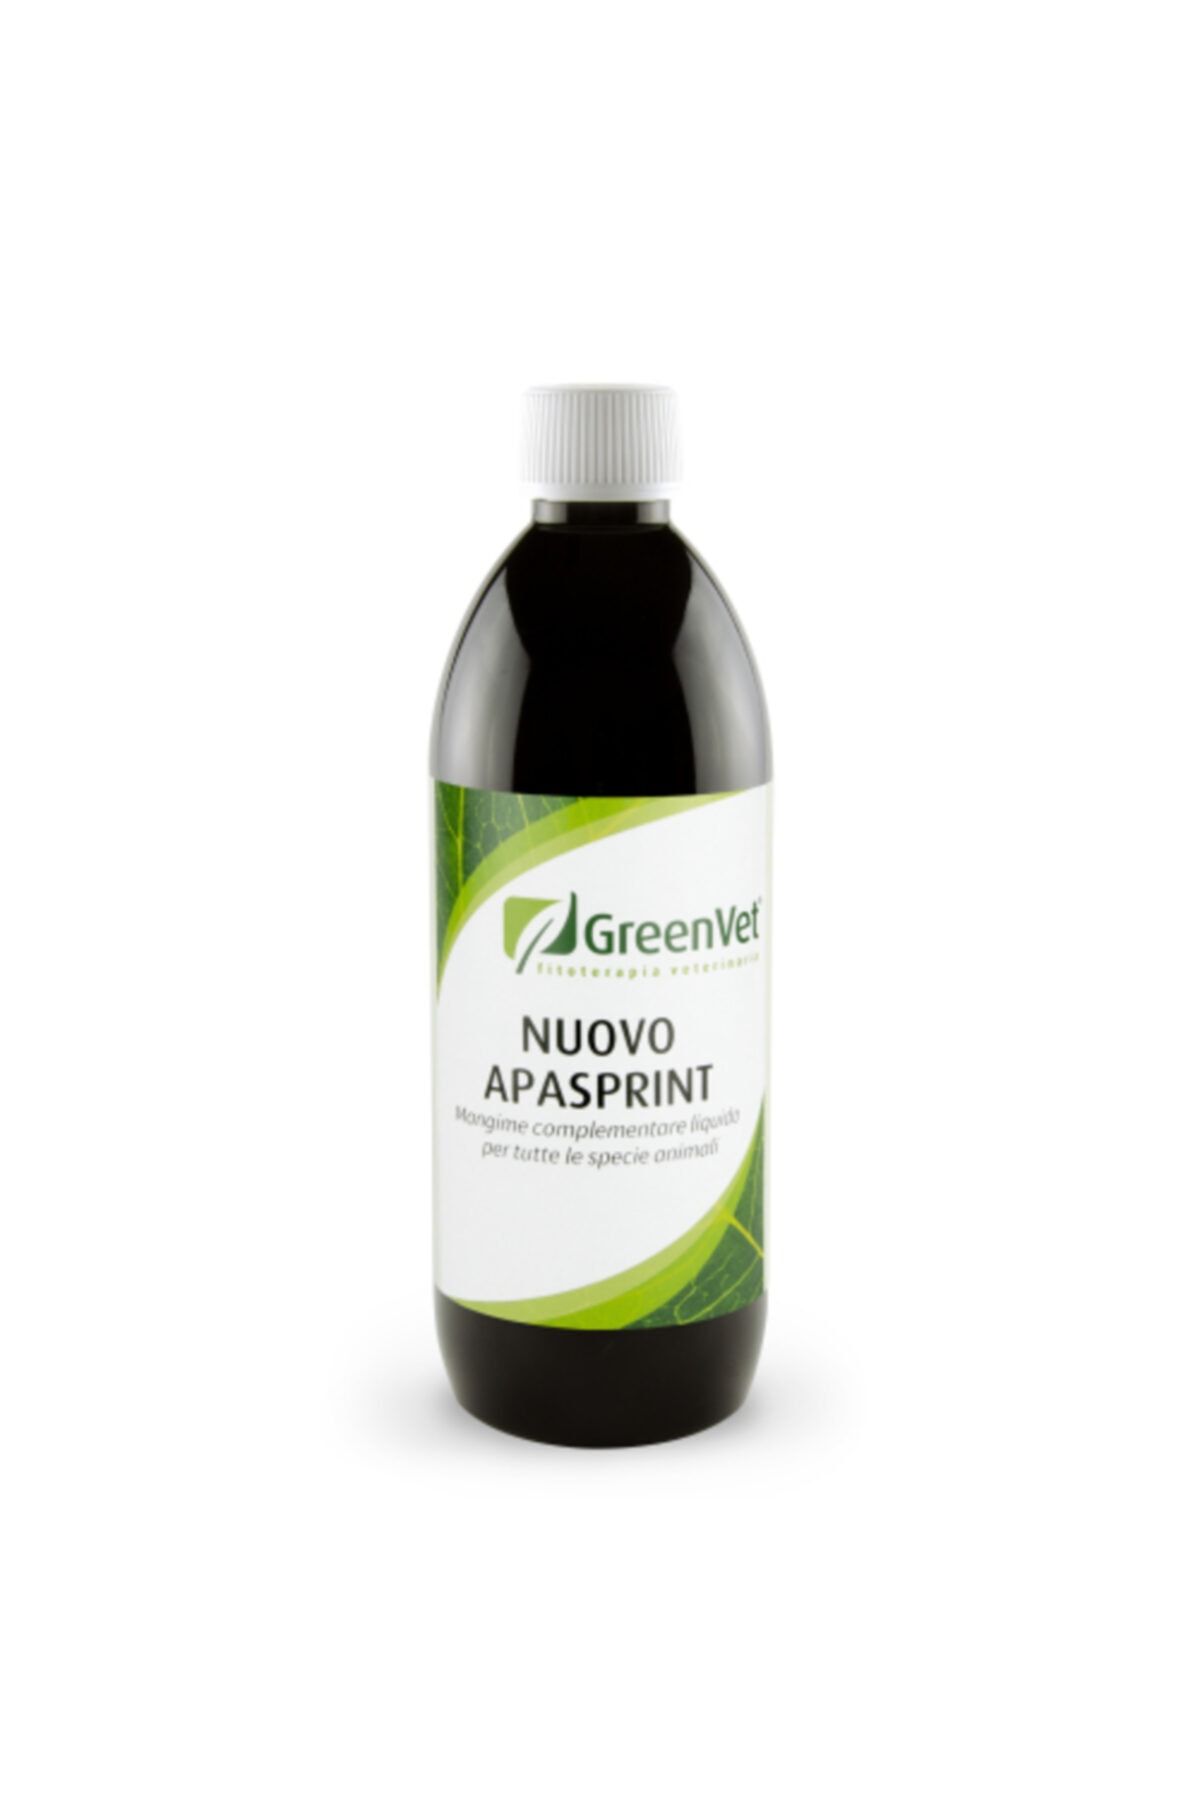 Greenvet Nuovo Apasprint 500 Ml